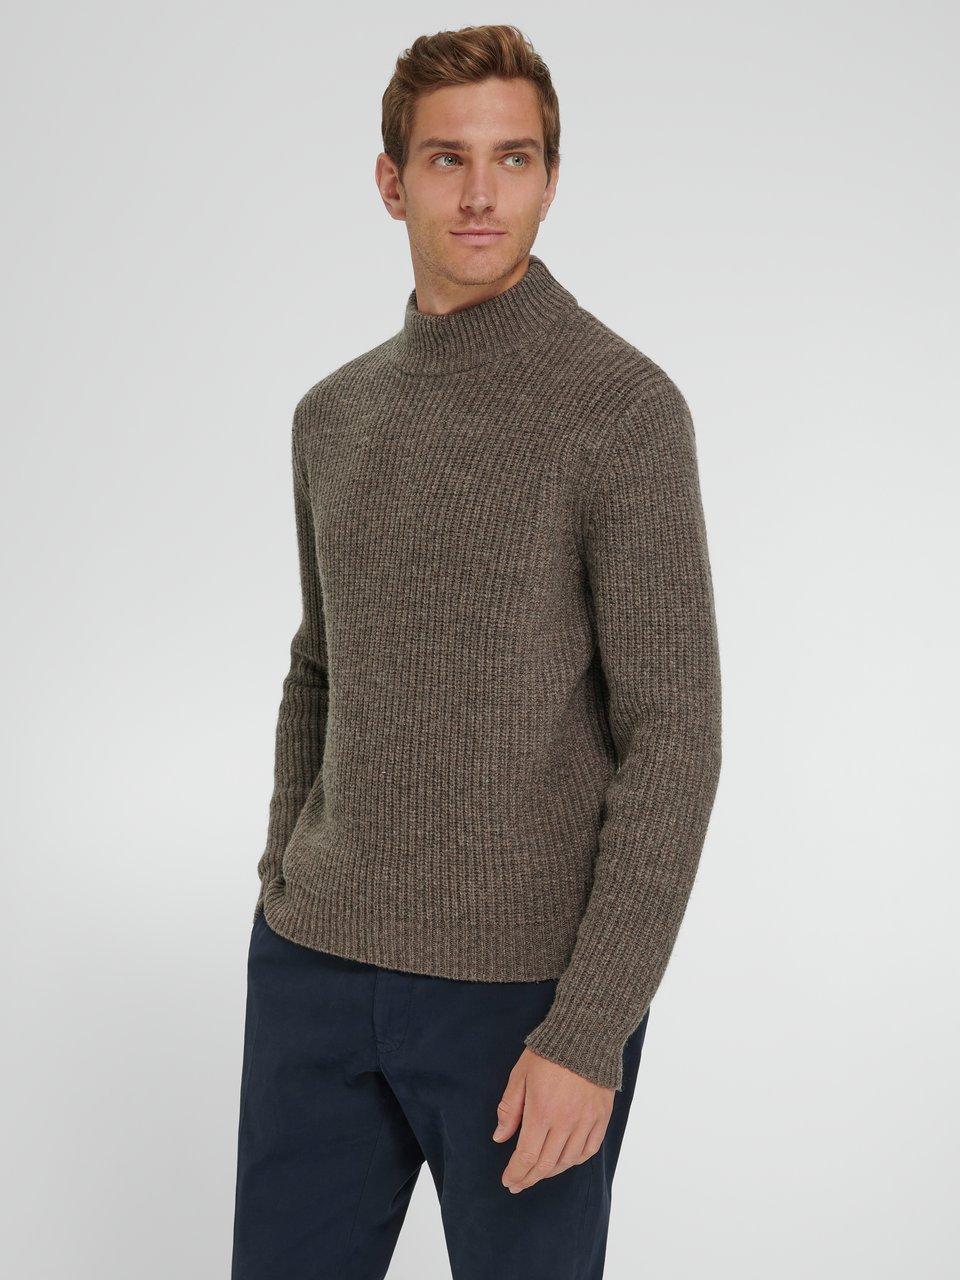 Louis Sayn - Grofgebreide trui van 100% scheerwol